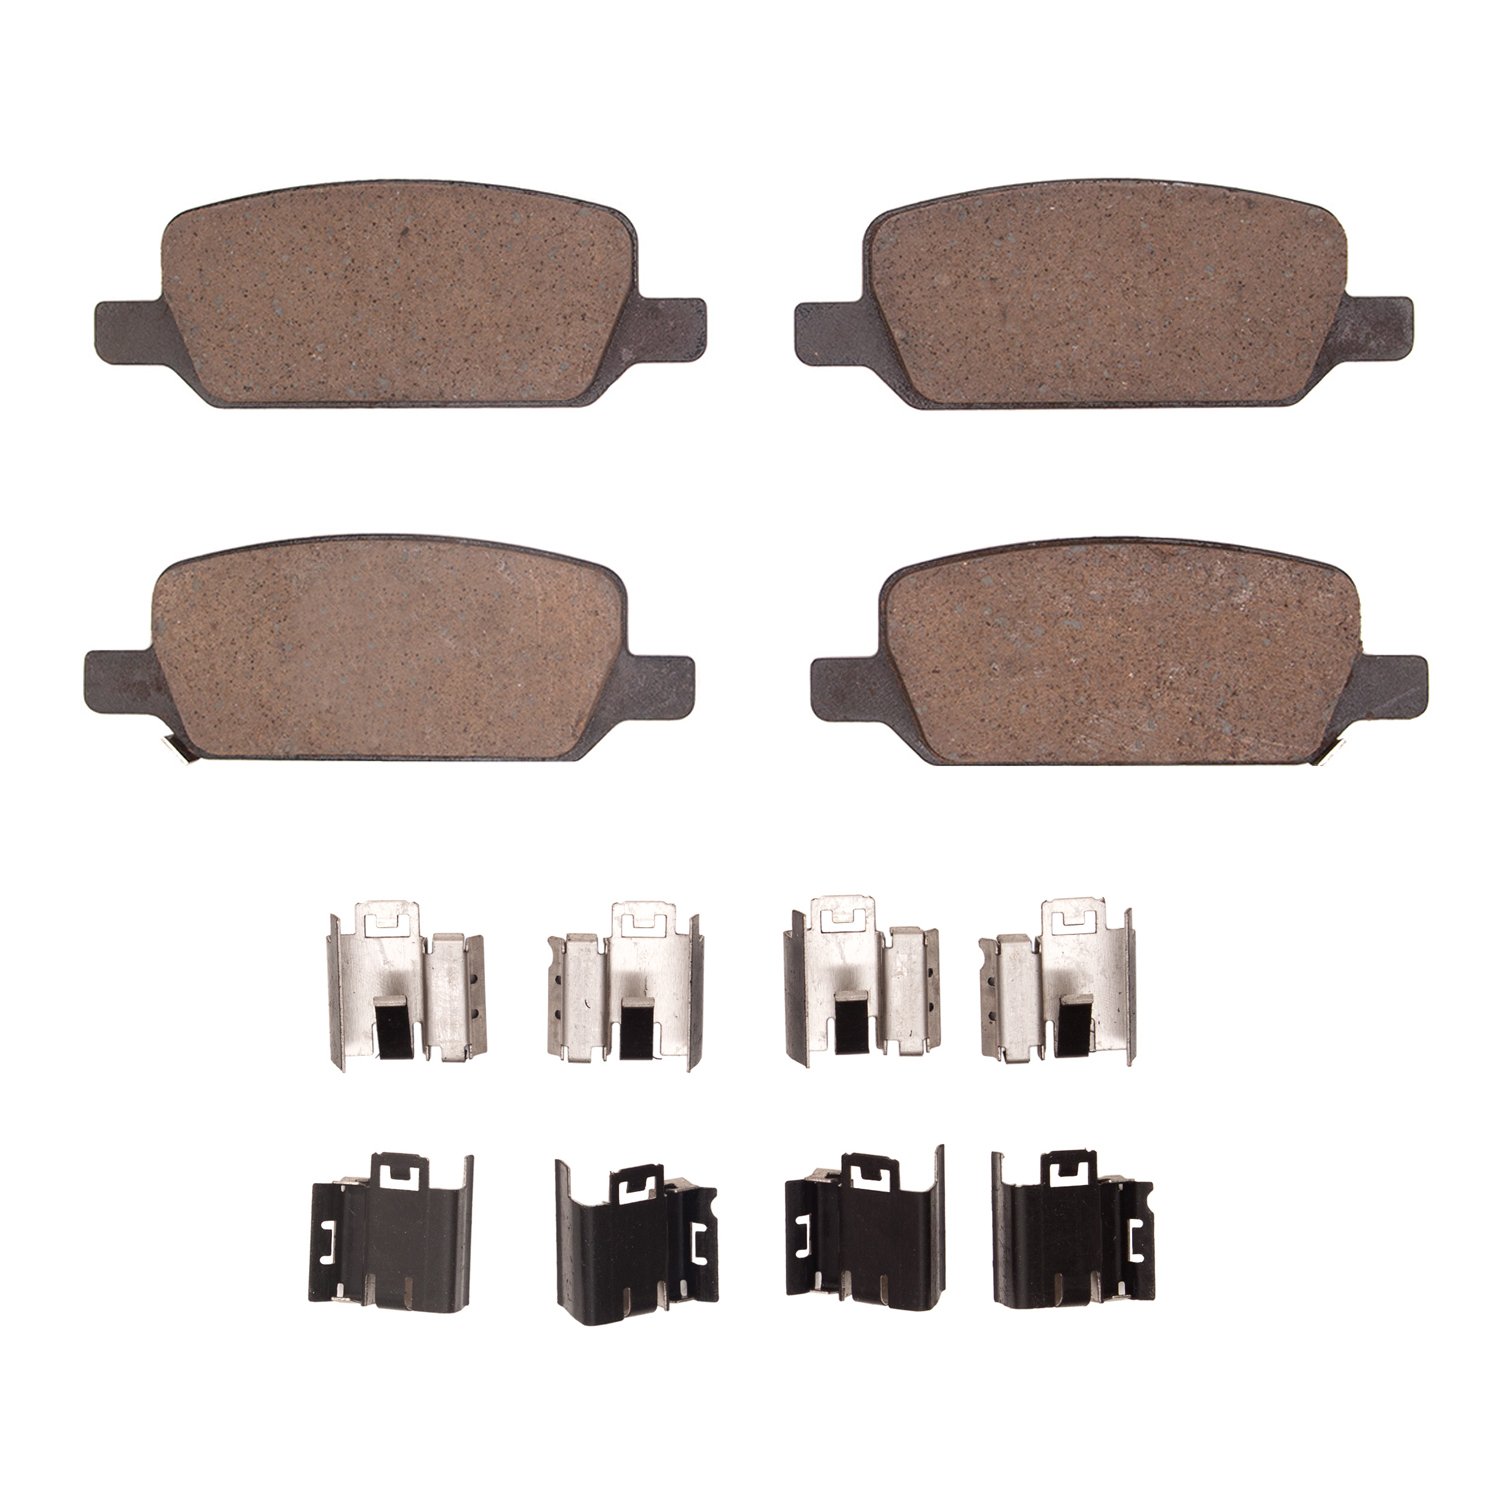 Optimum OE Brake Pads & Hardware Kit, Fits Select Tesla, Position: Rear